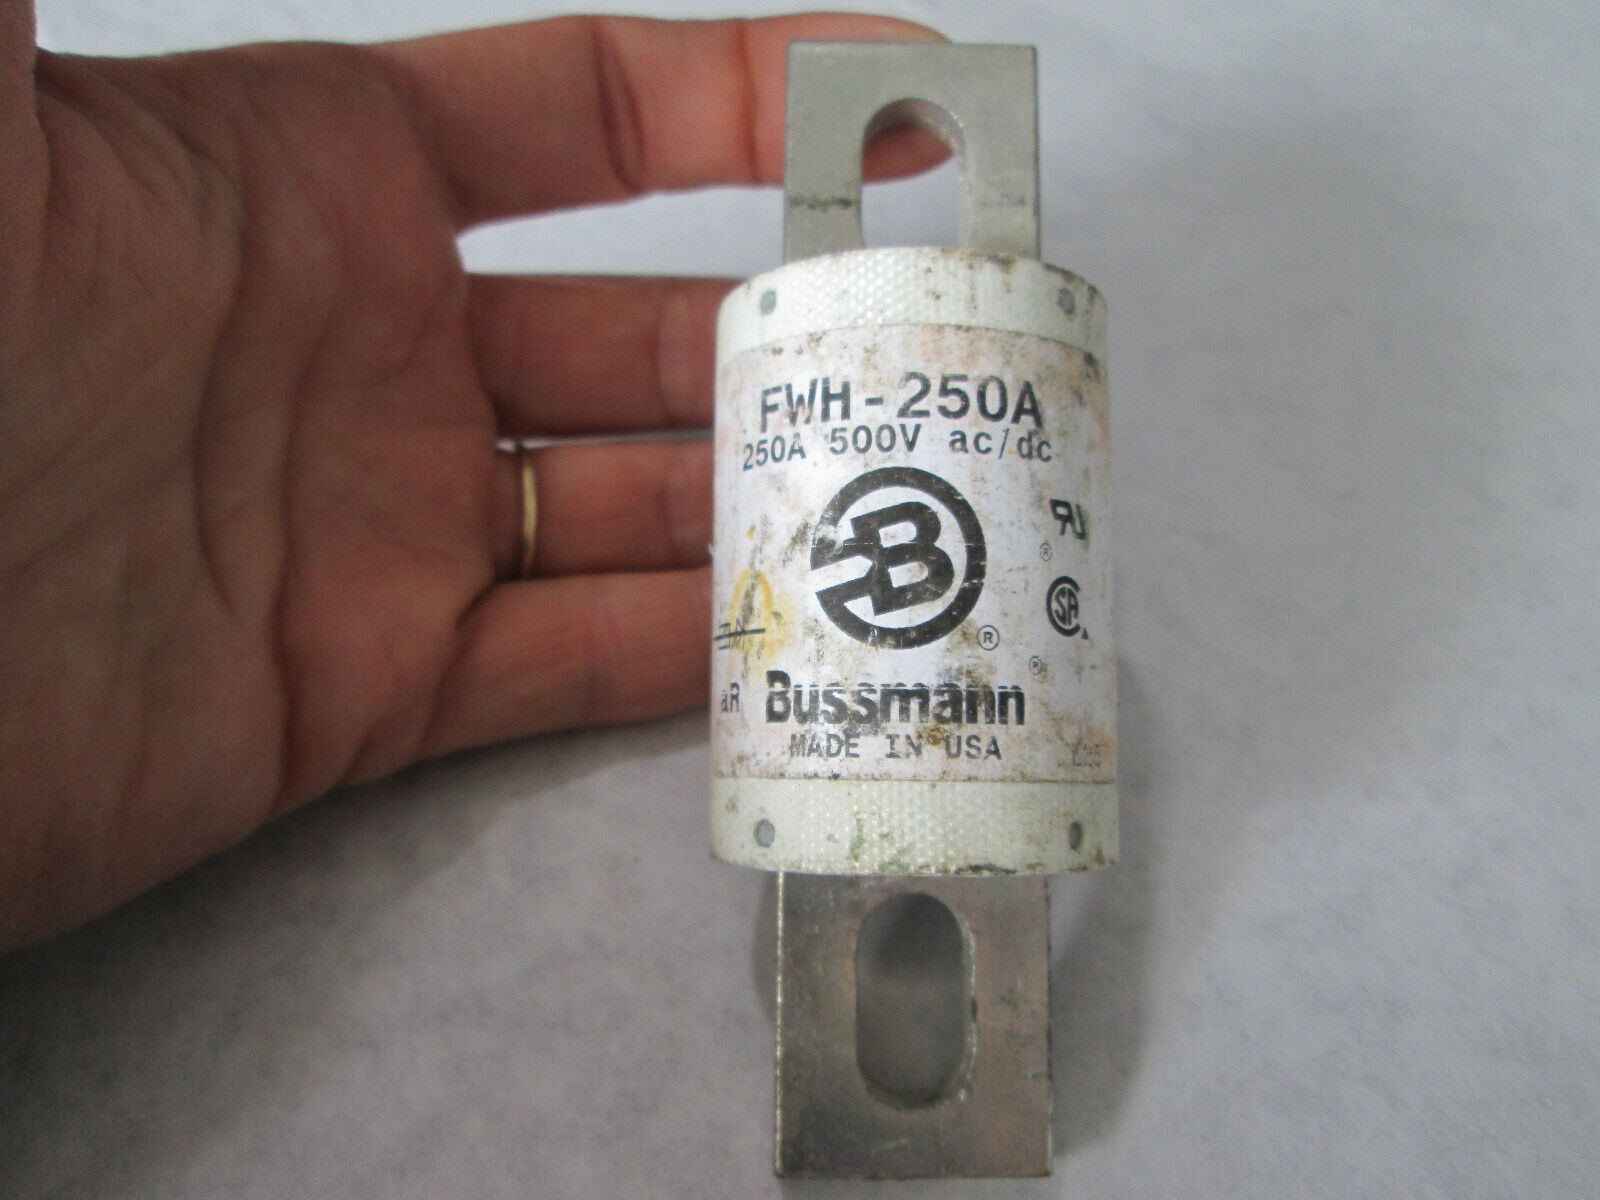 Bussmann FWH-250A Semi Conductor Fuse (250 Amp, 500 Volt) TESTED